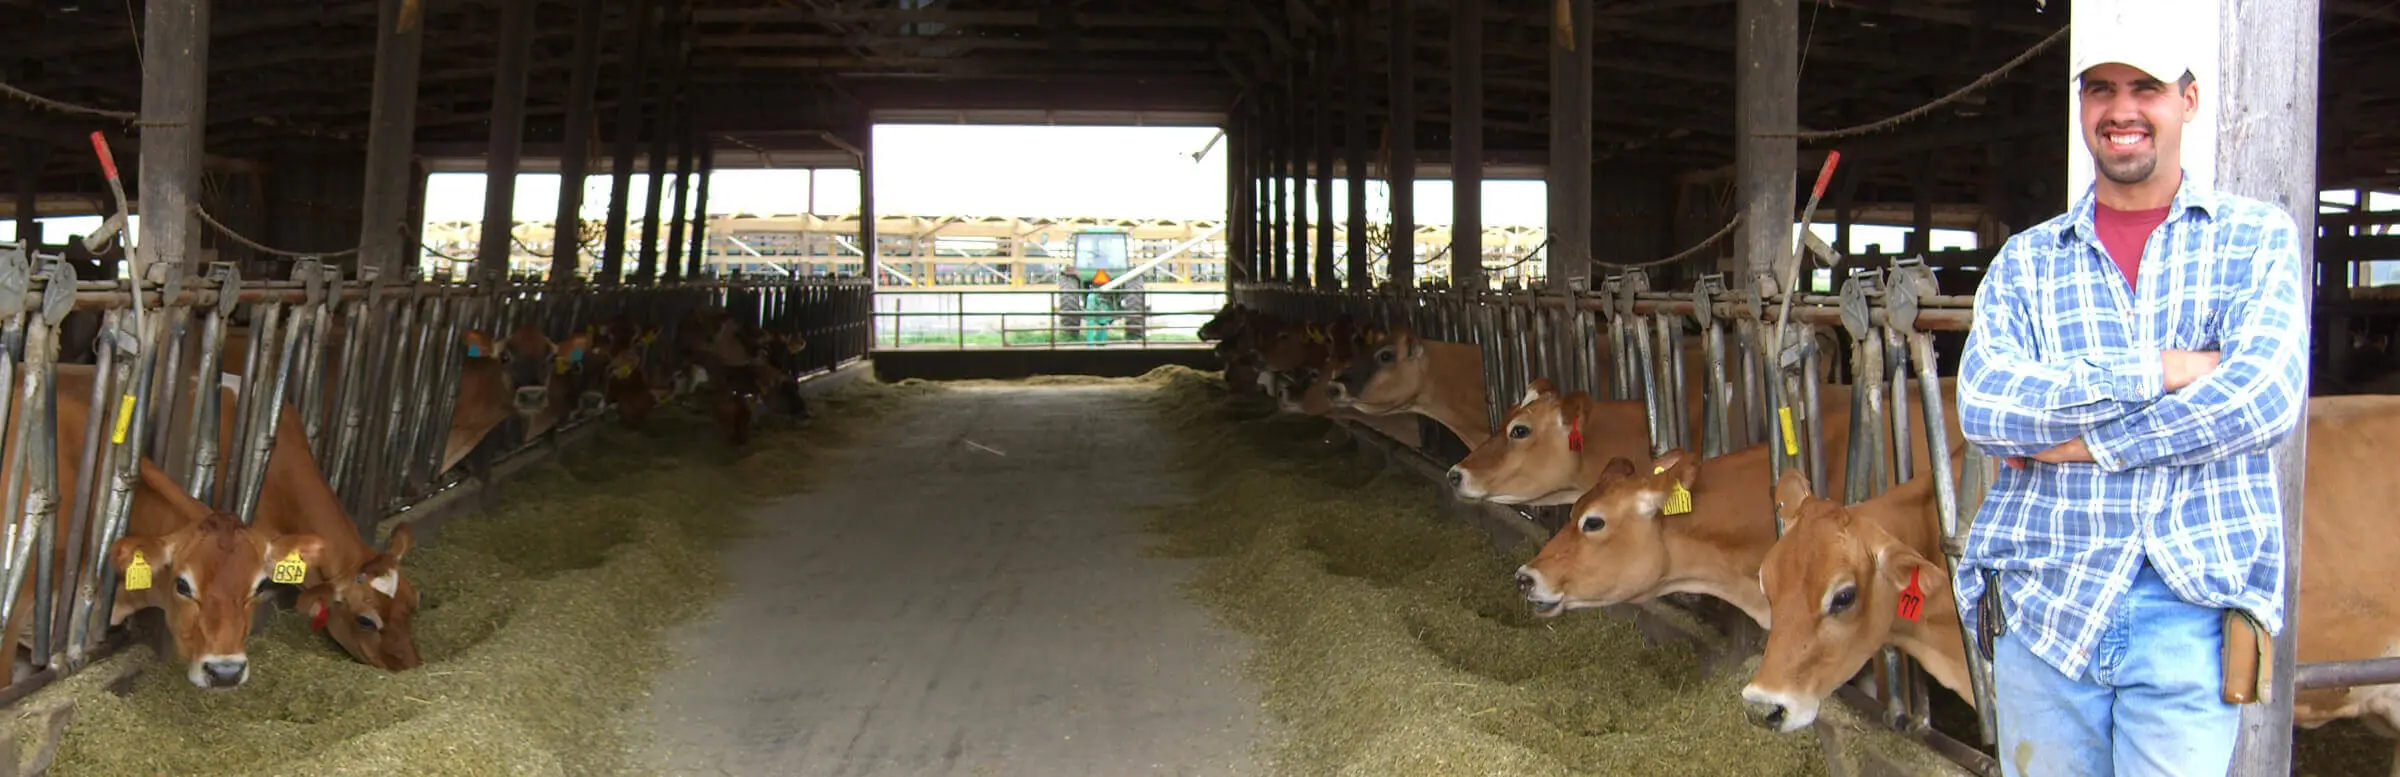 Farm Animal Welfare . Dairy